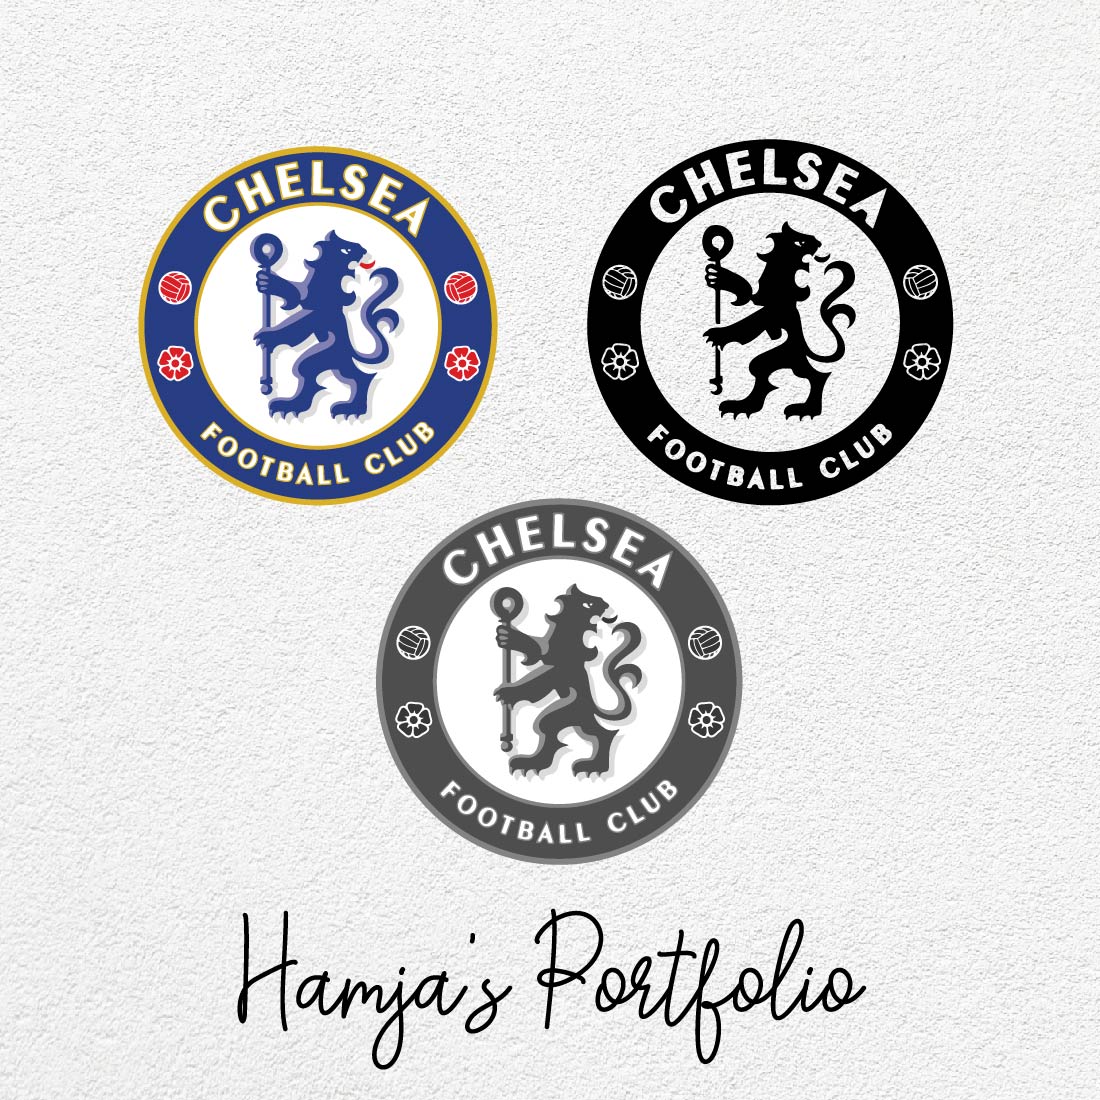 Chelsea Football Club Logo Vector Set cover image.